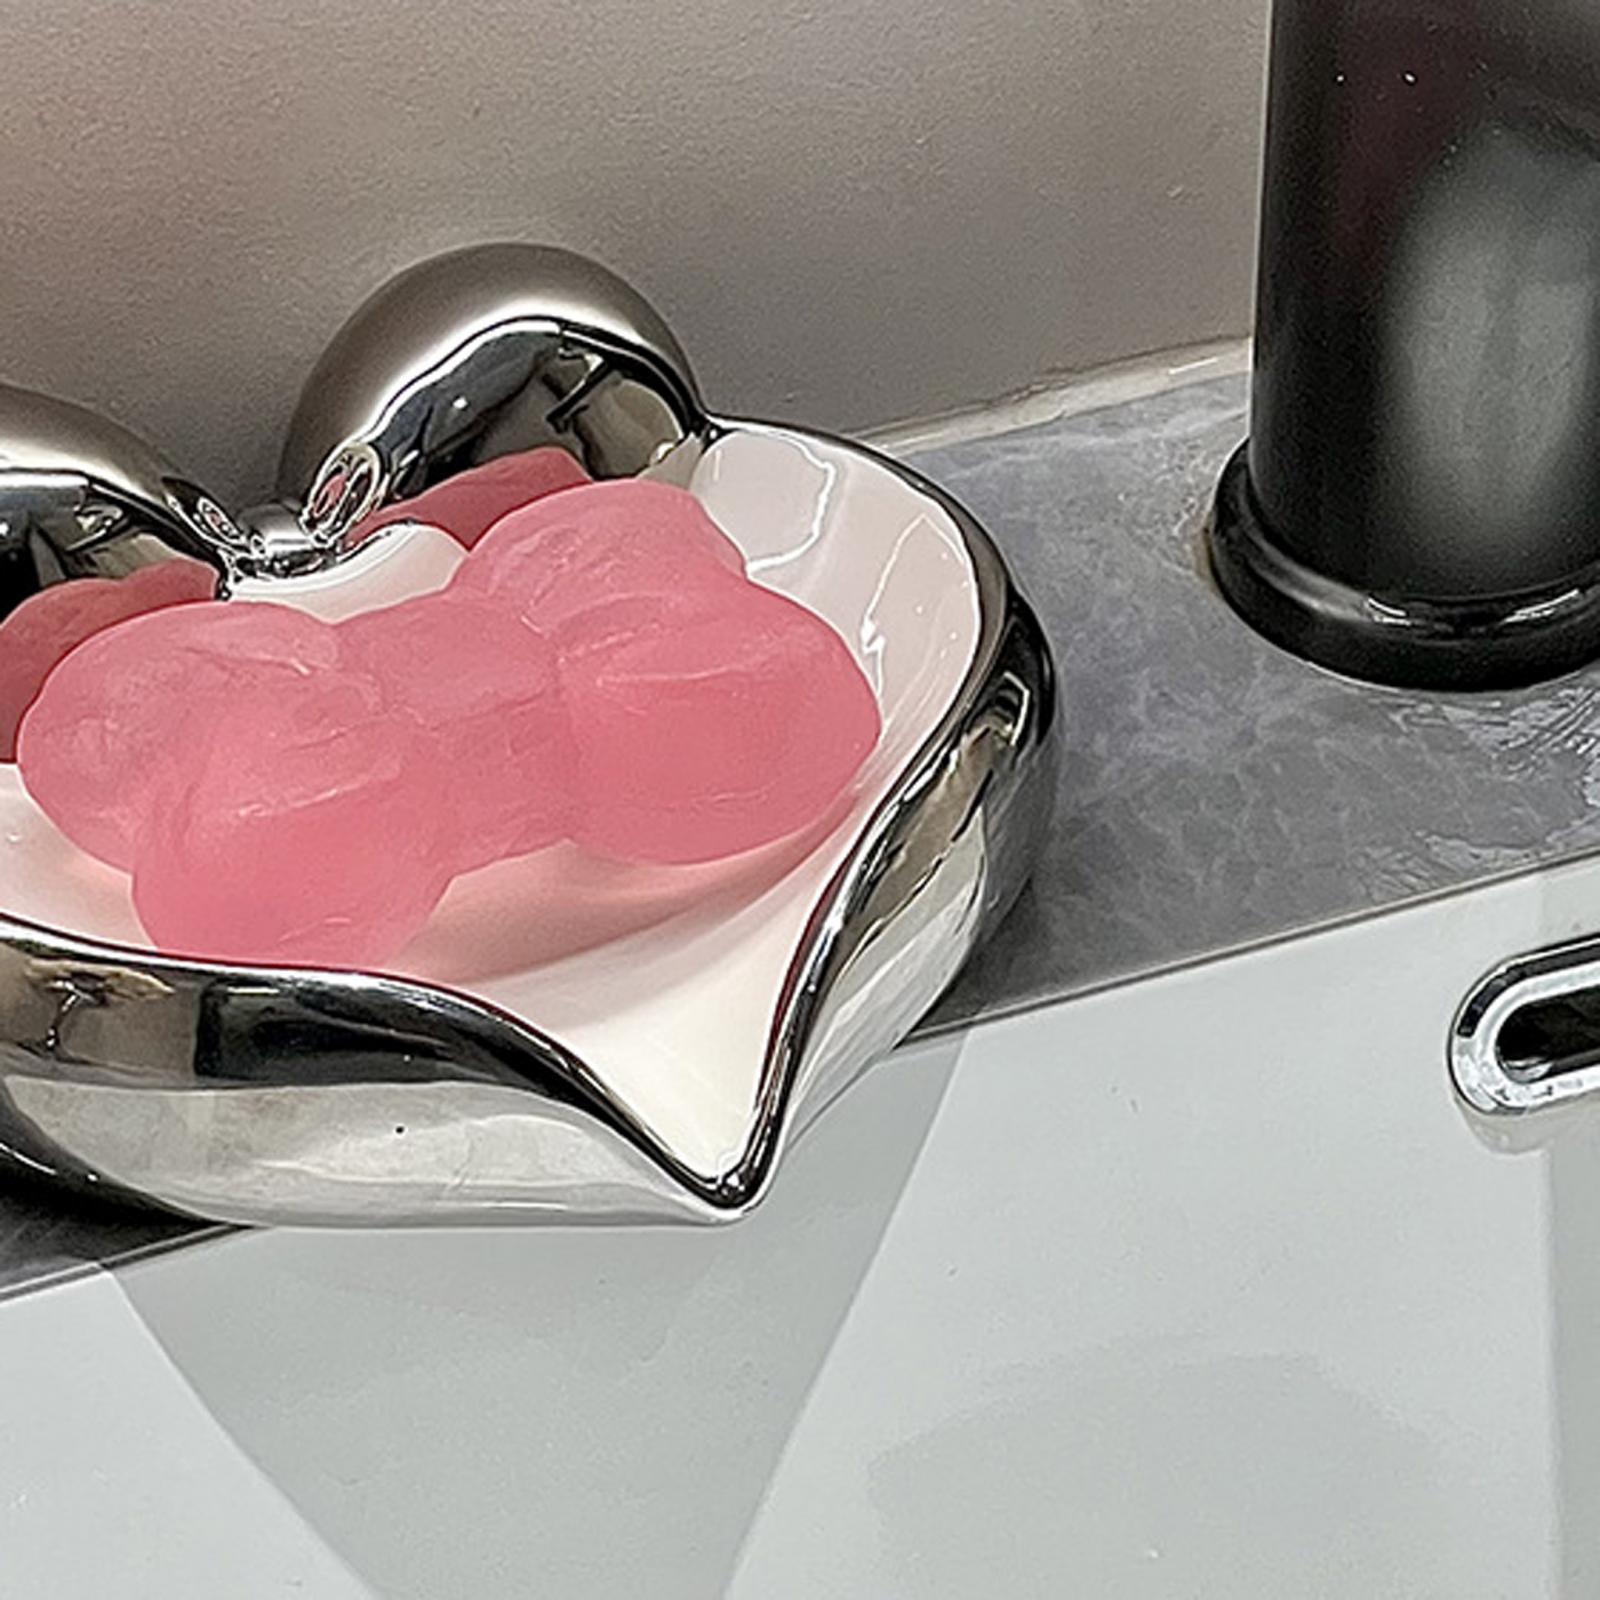 Ceramic Soap Dish Self Draining Soap Holder Soap Box for Bathroom Countertop